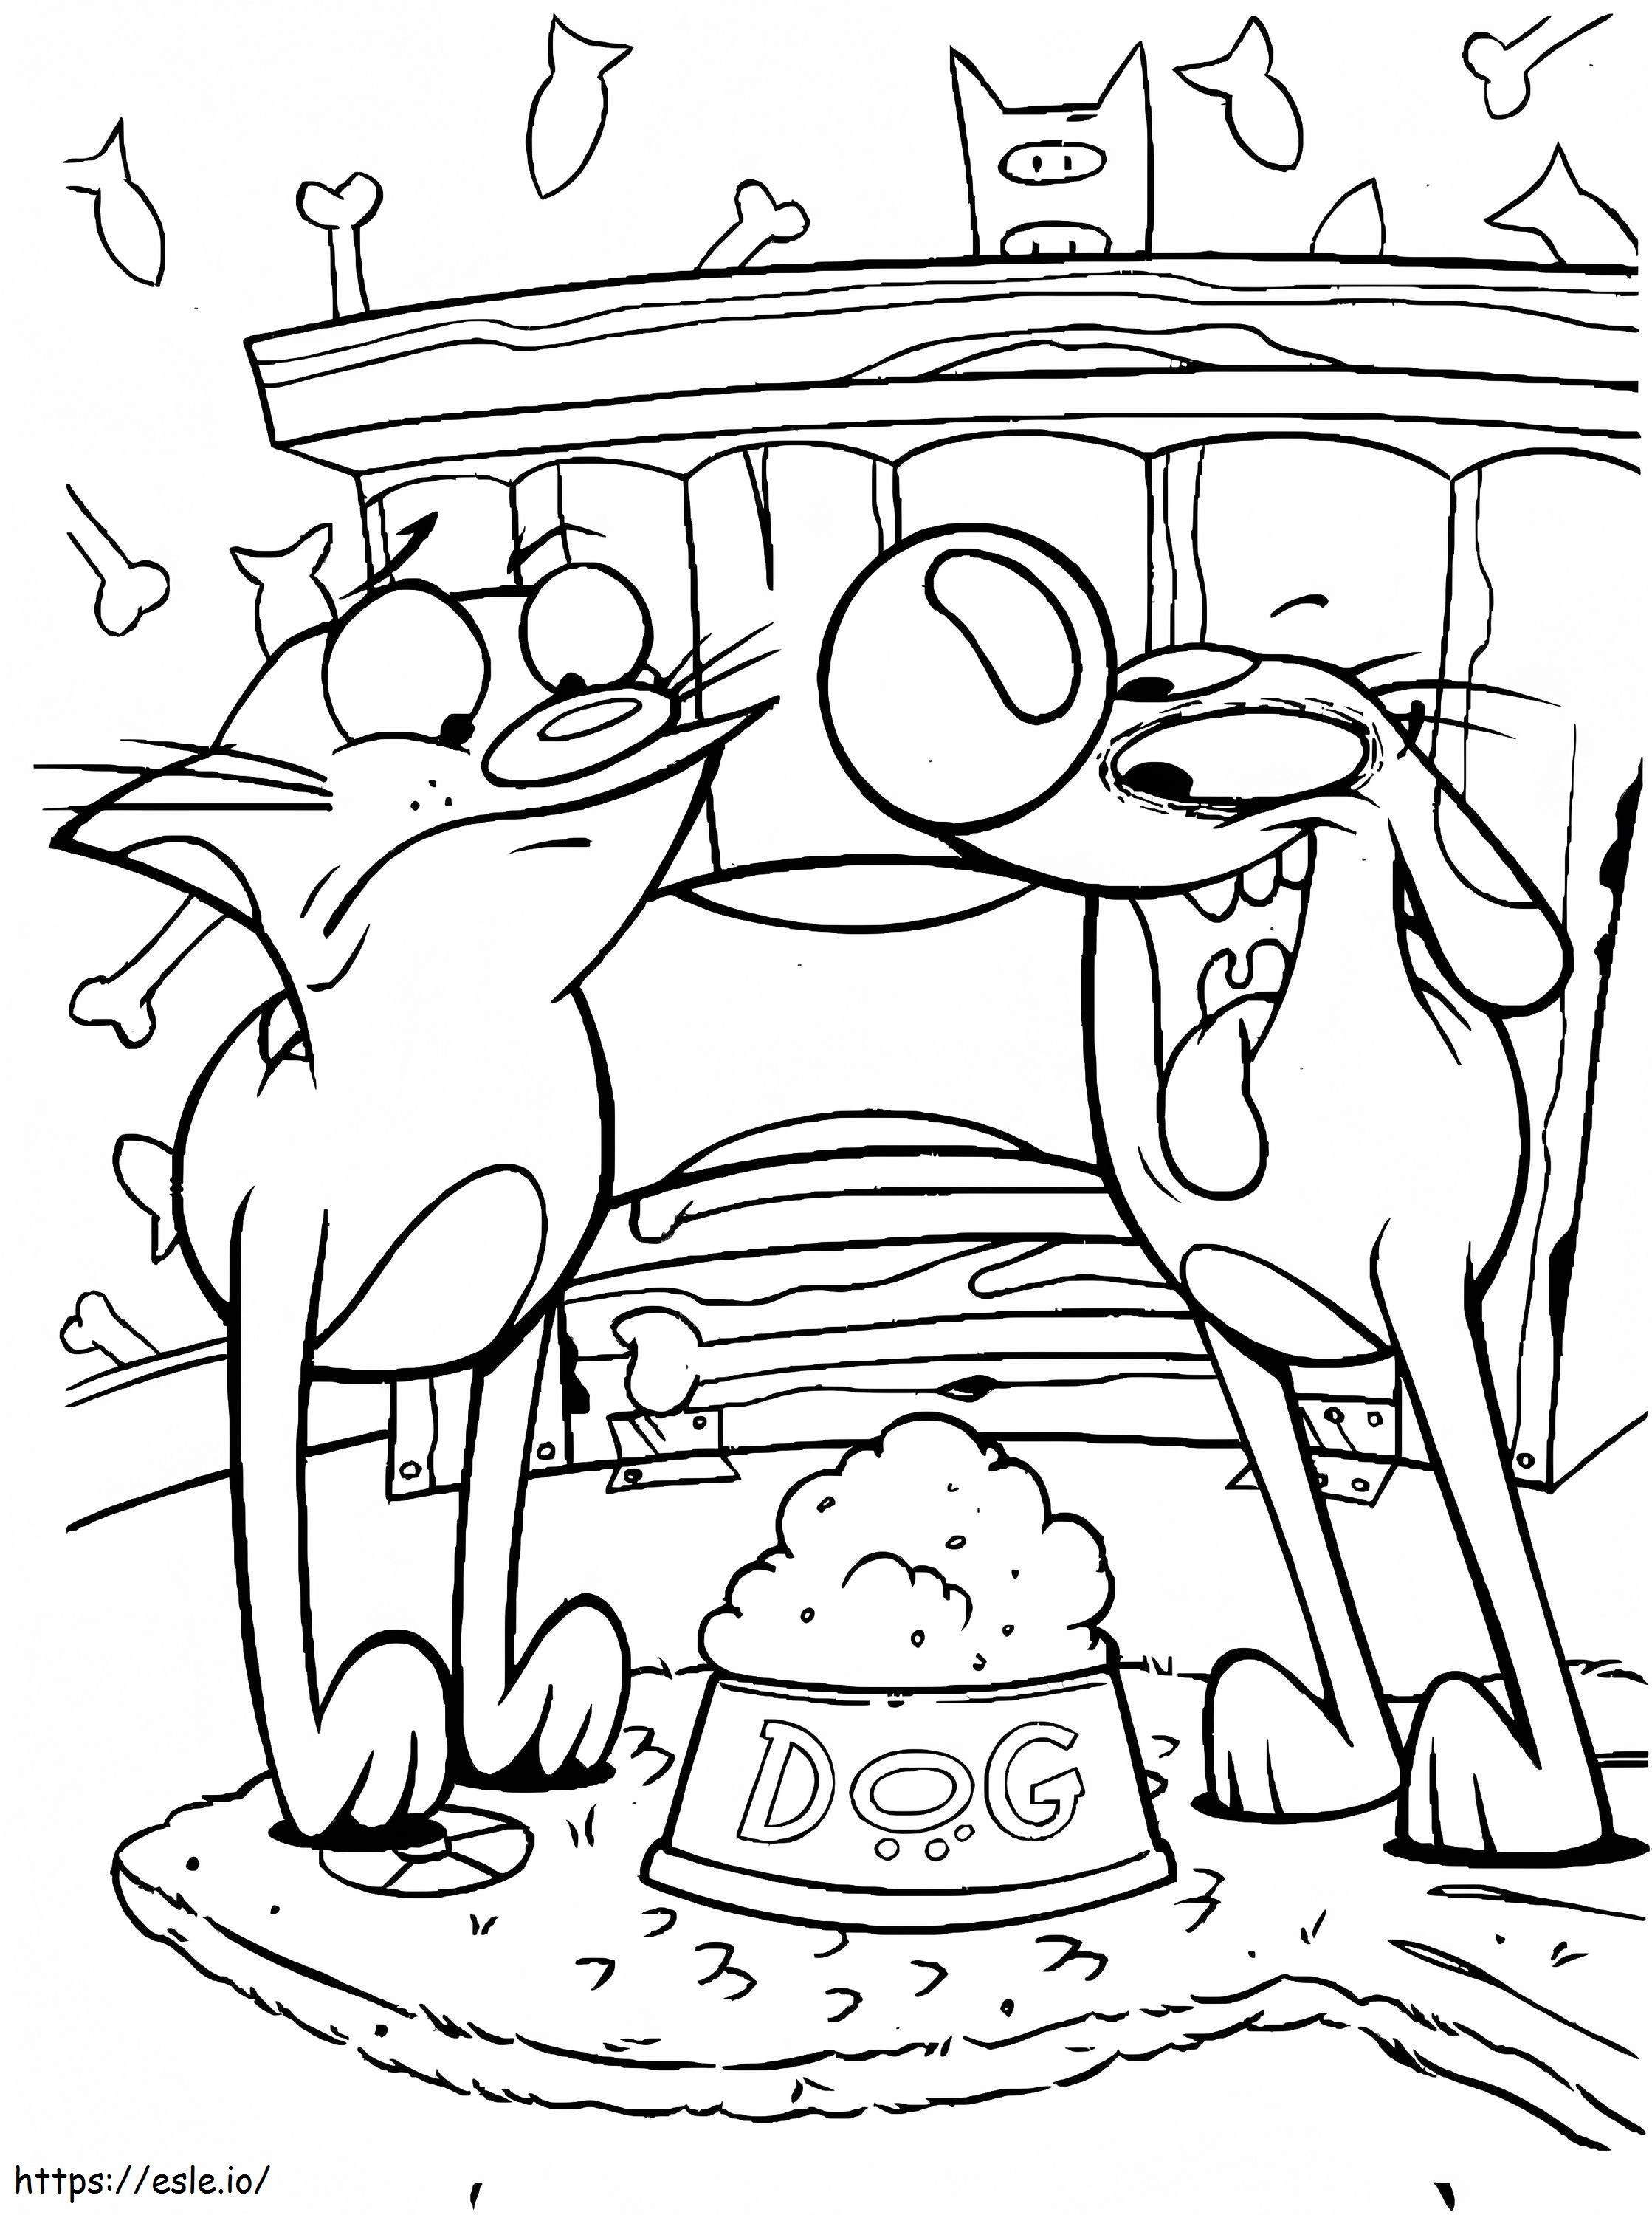 Catdog And Dog Food coloring page